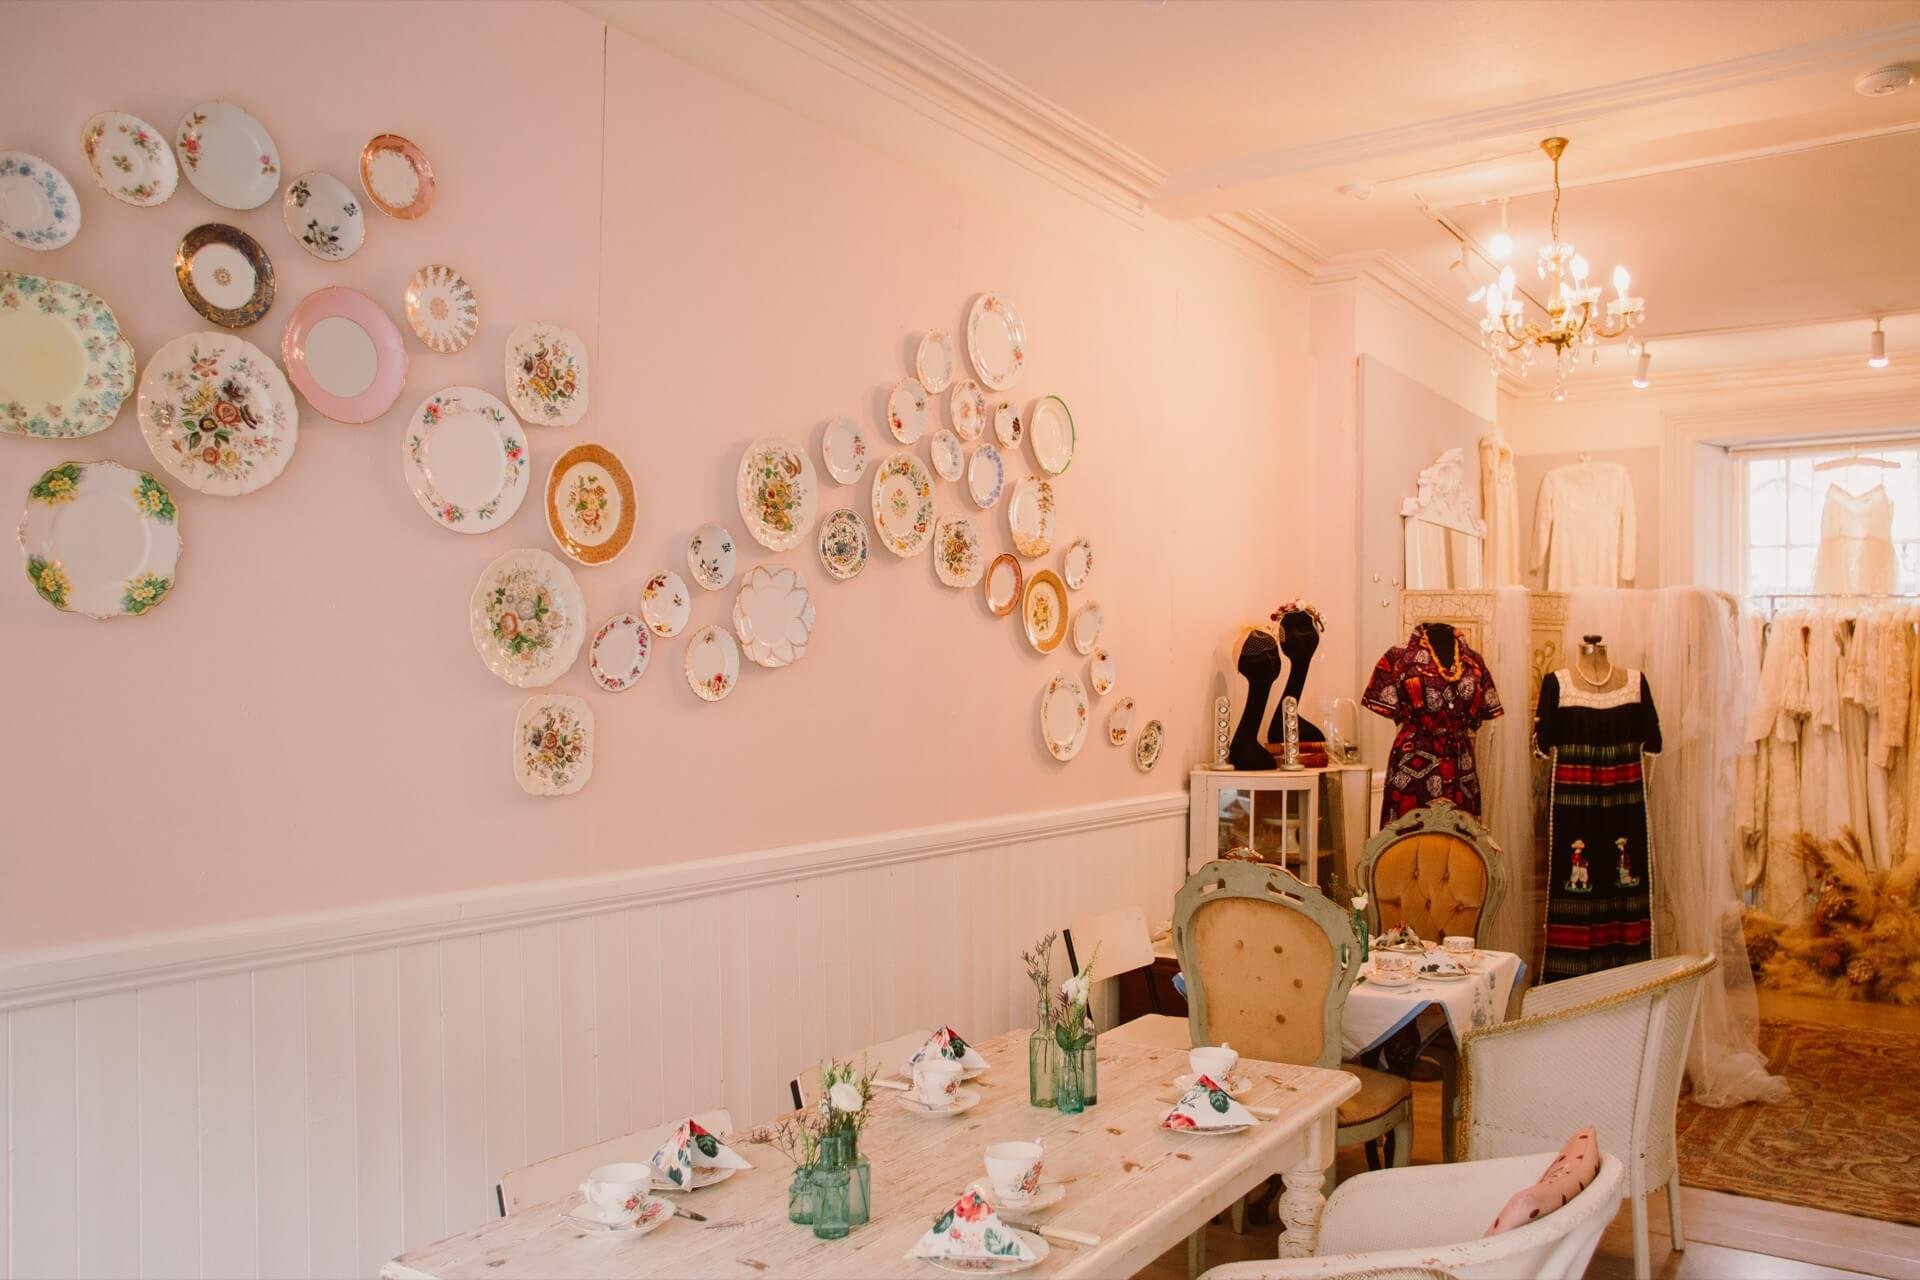 tearoom-vintage-plates-on-wall-ashwell-and-co.jpeg